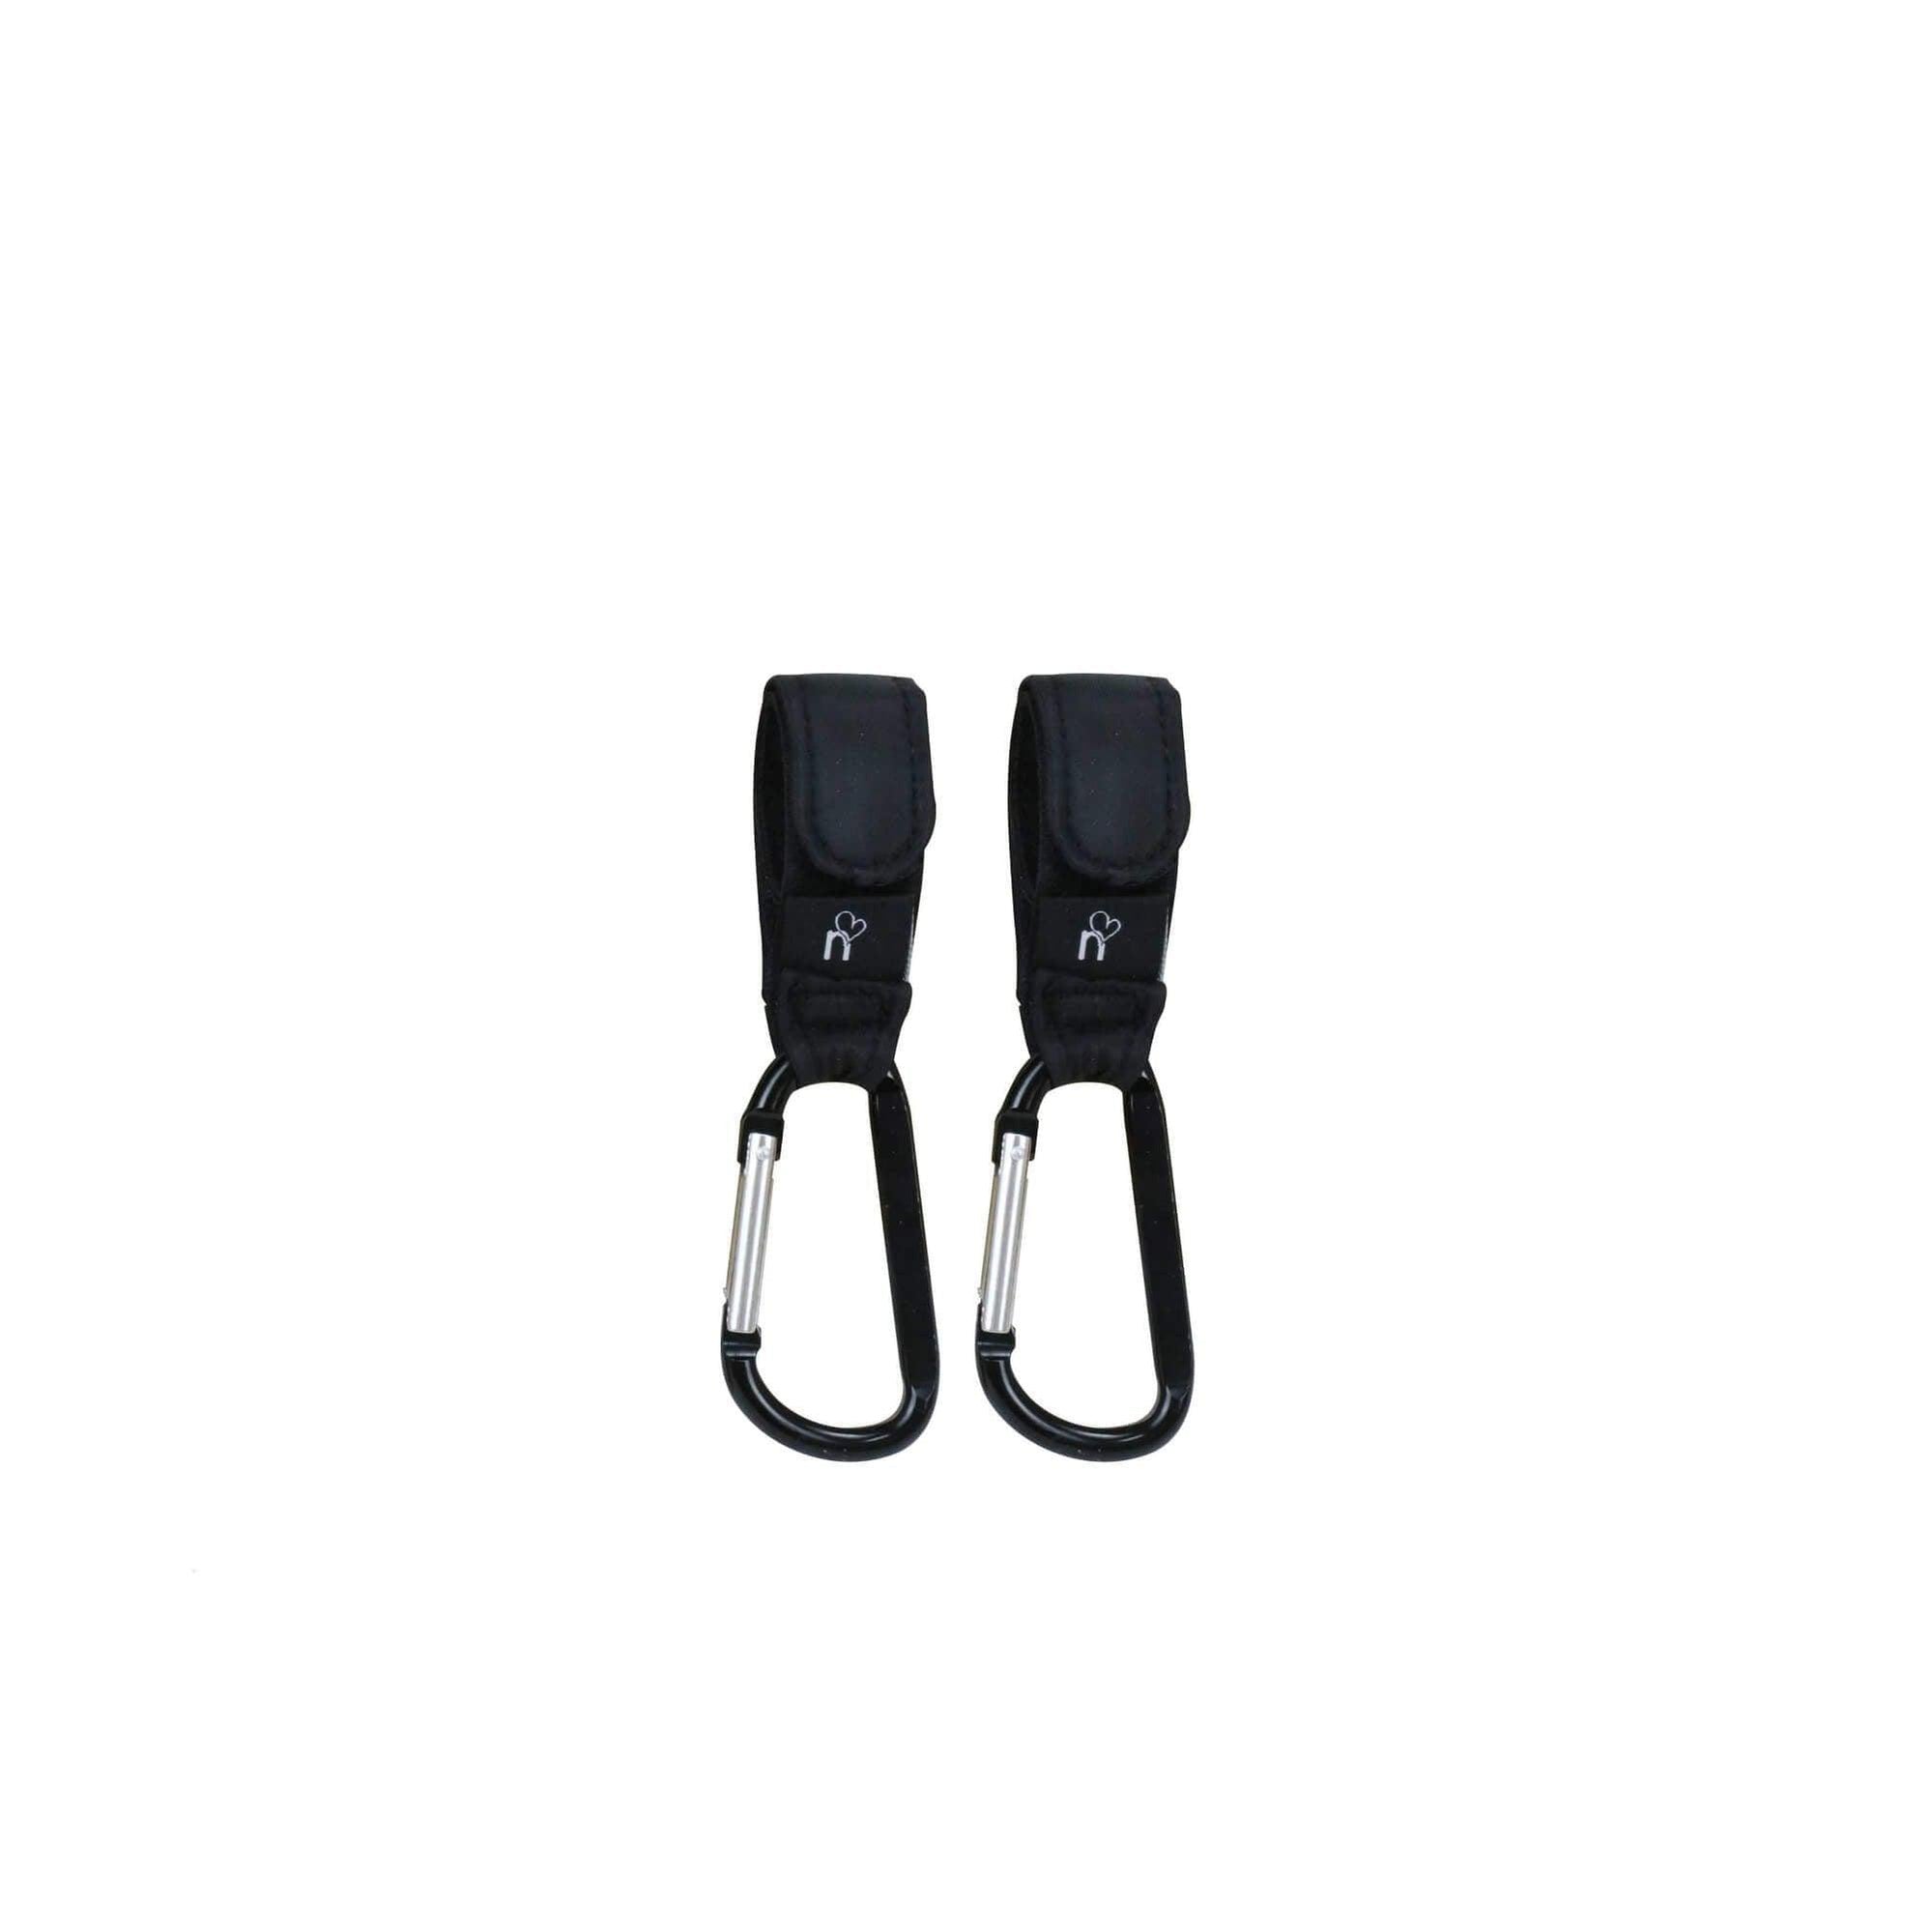 noola strollerbuddy multi purpose hooks set of 2 baby stroller accessories